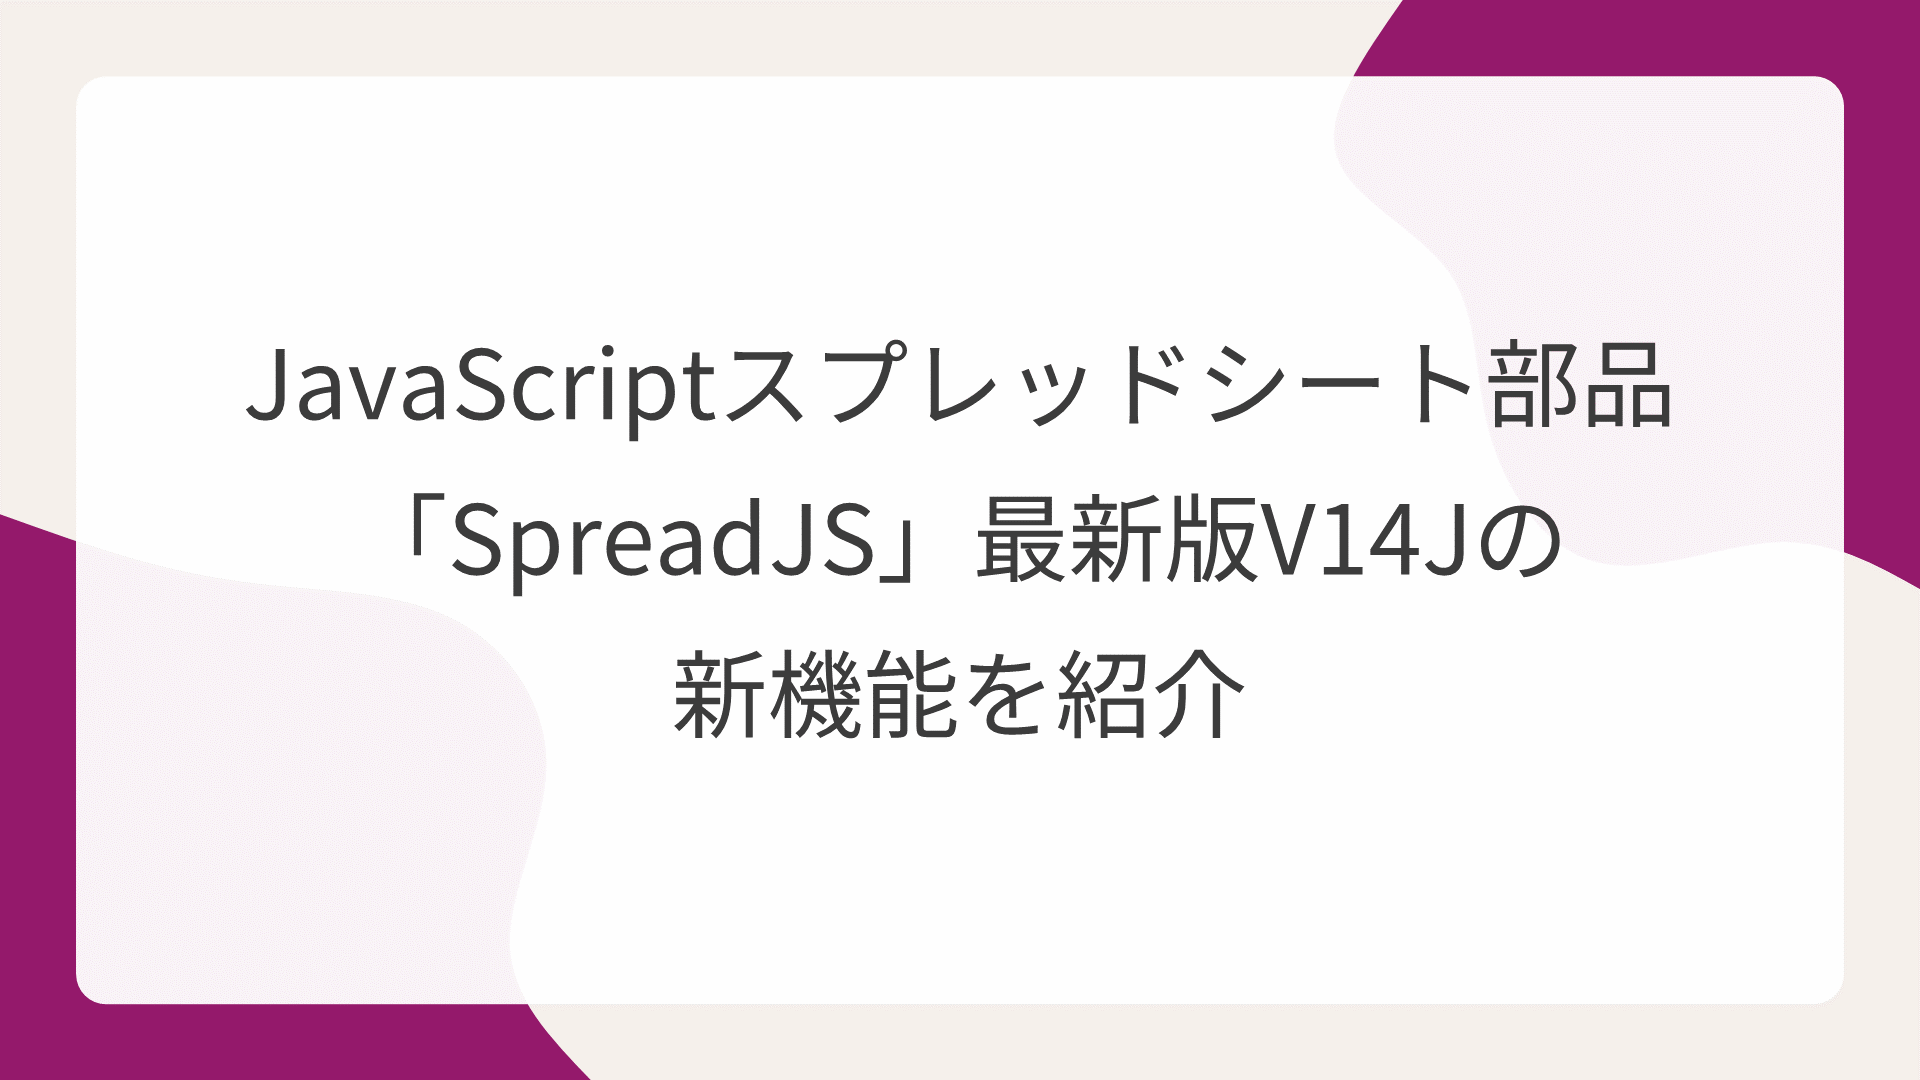 JavaScriptスプレッドシート部品「SpreadJS」最新版V14Jの新機能を紹介"